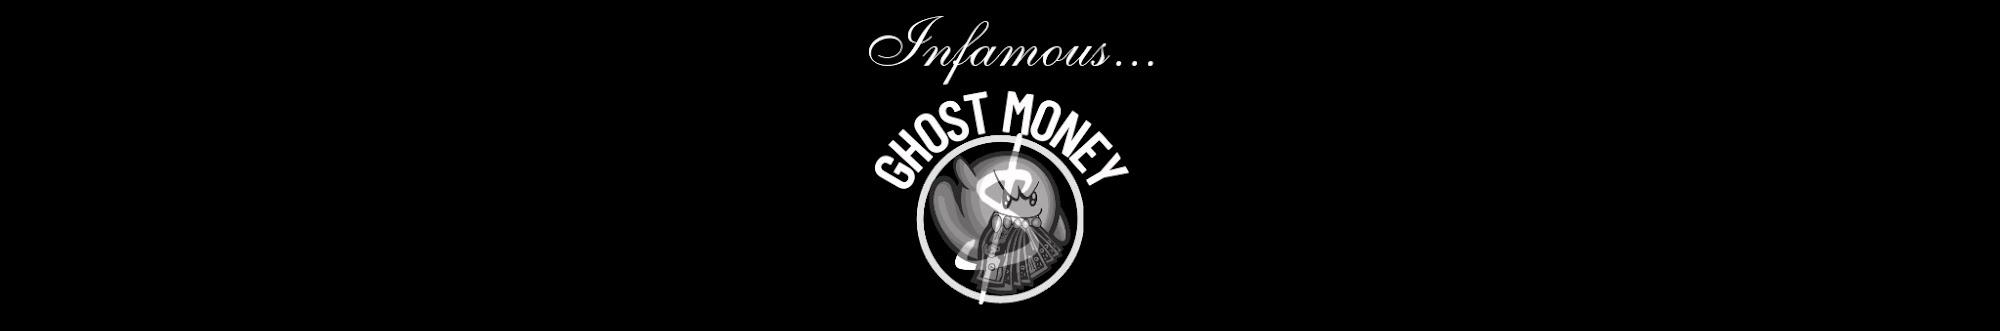 Infamous Ghost Money